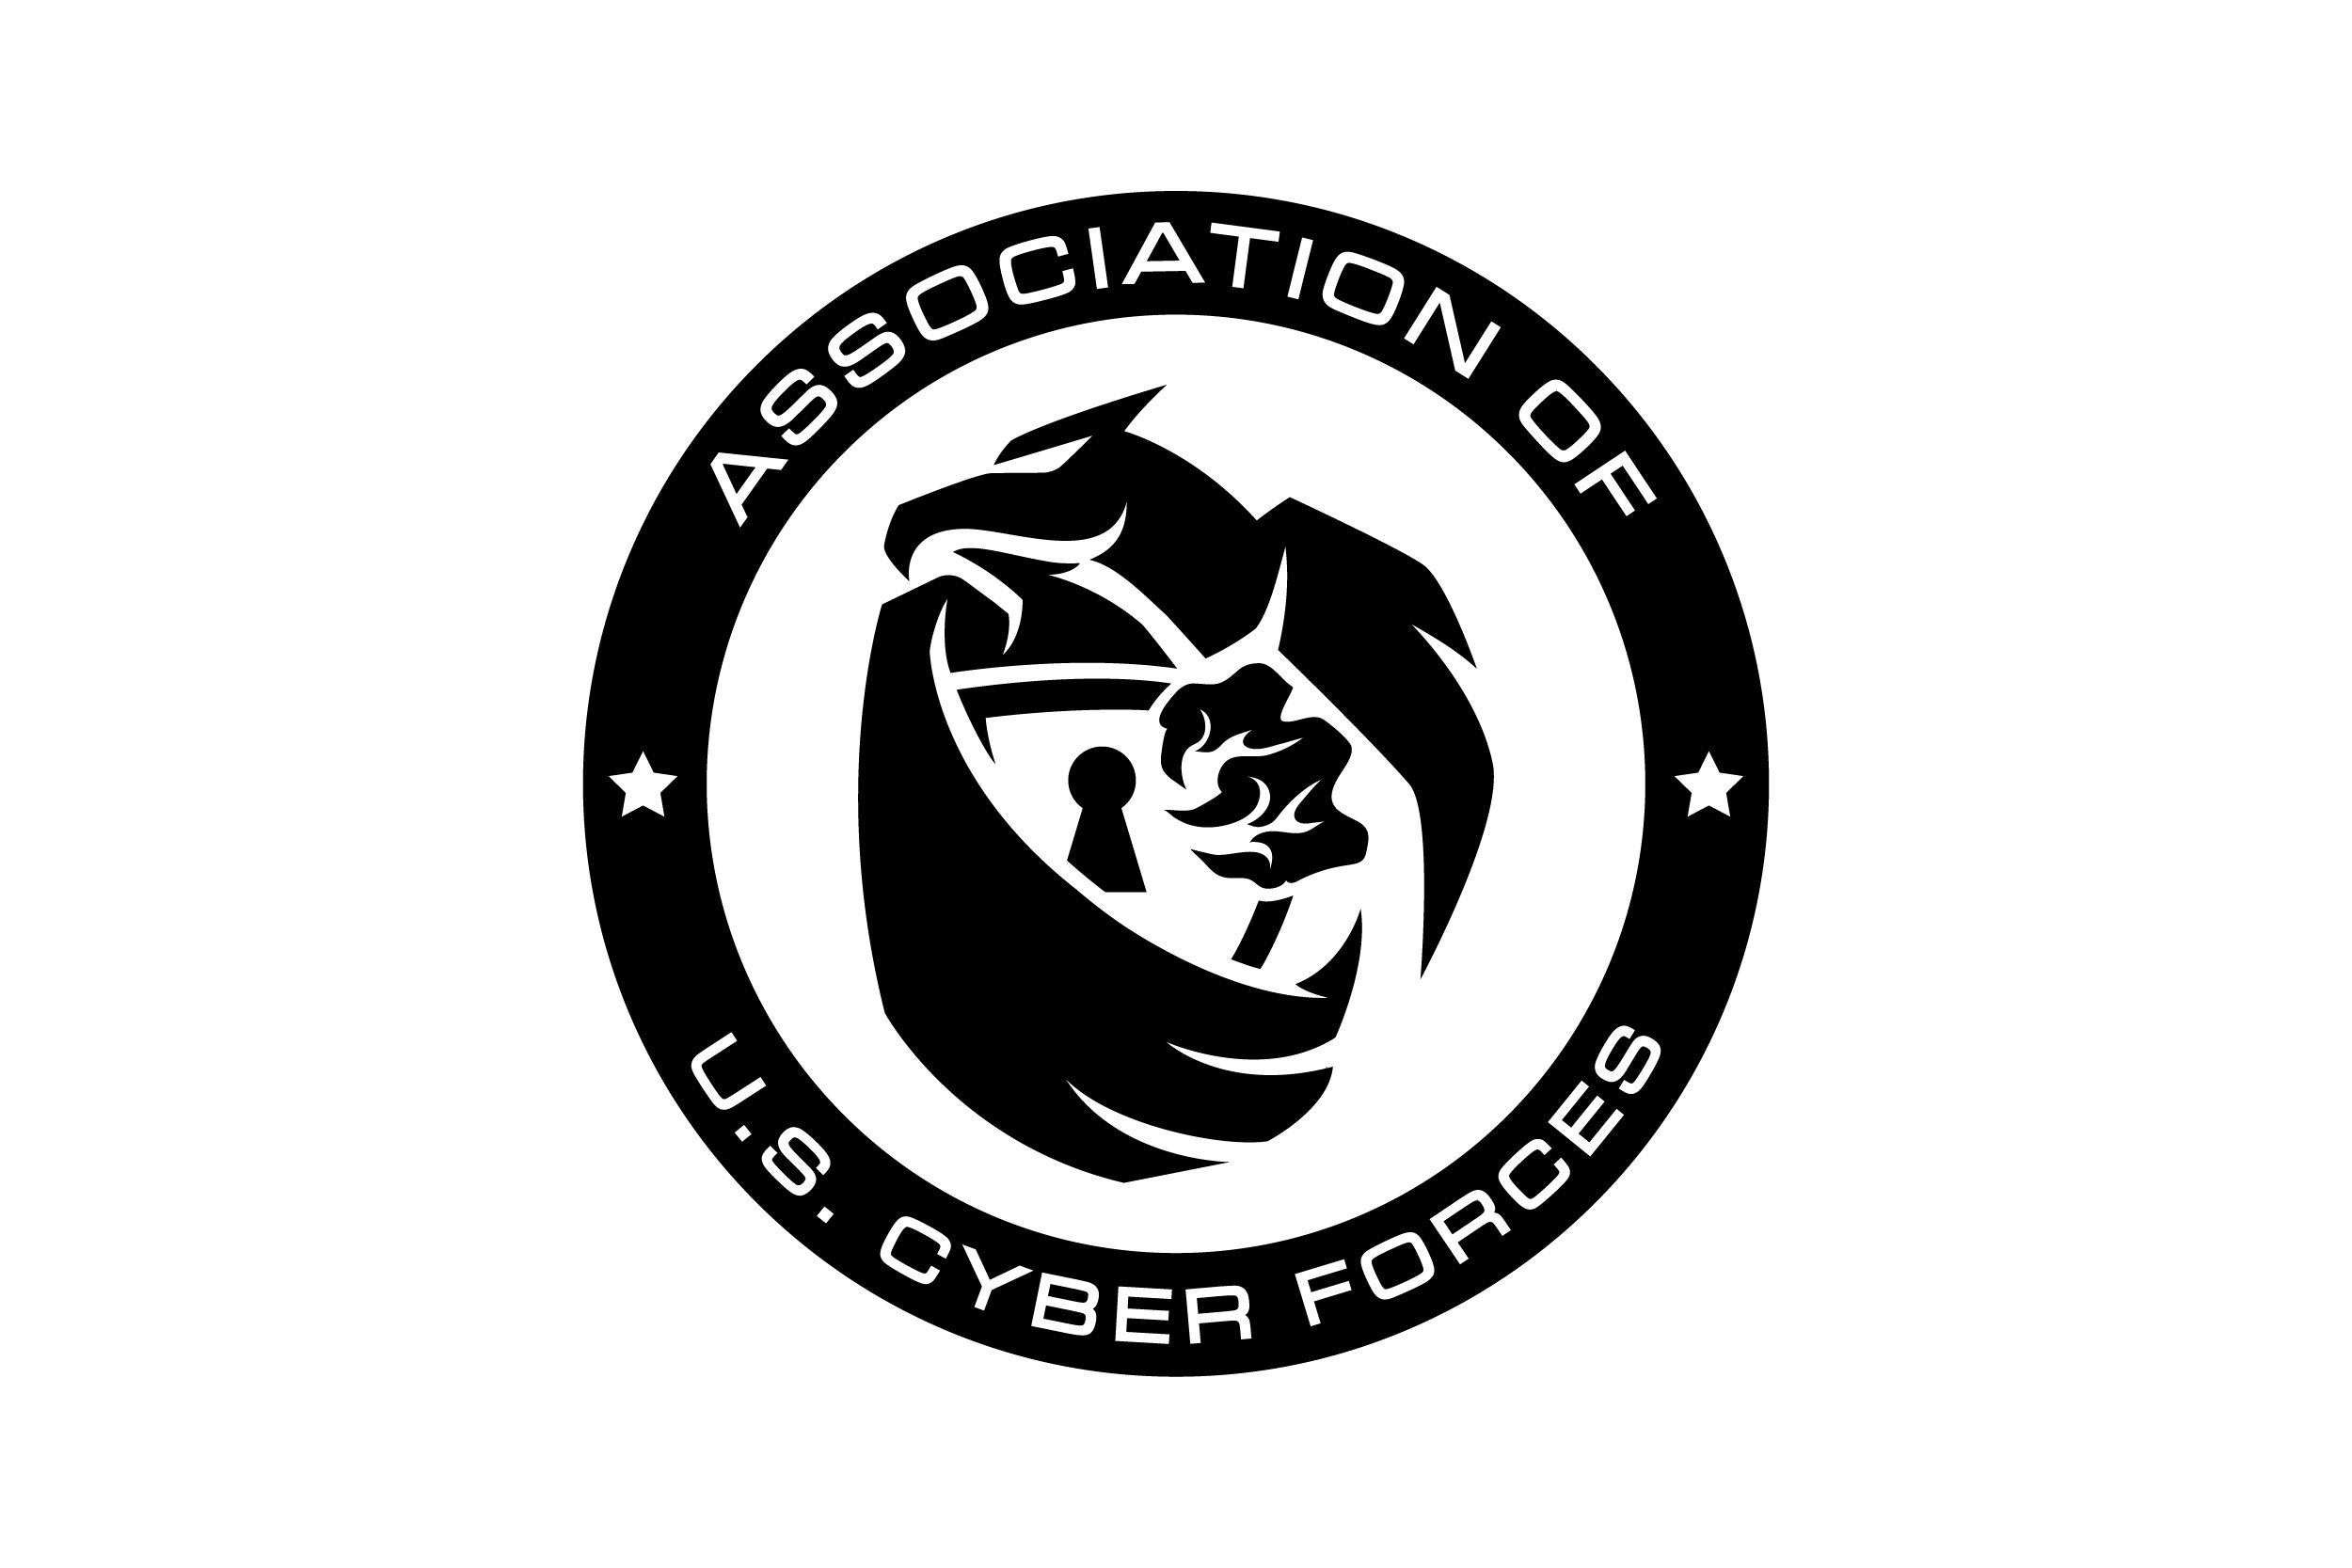 Association-of-U.S.-Cyber-Forces-Black-color-White-background